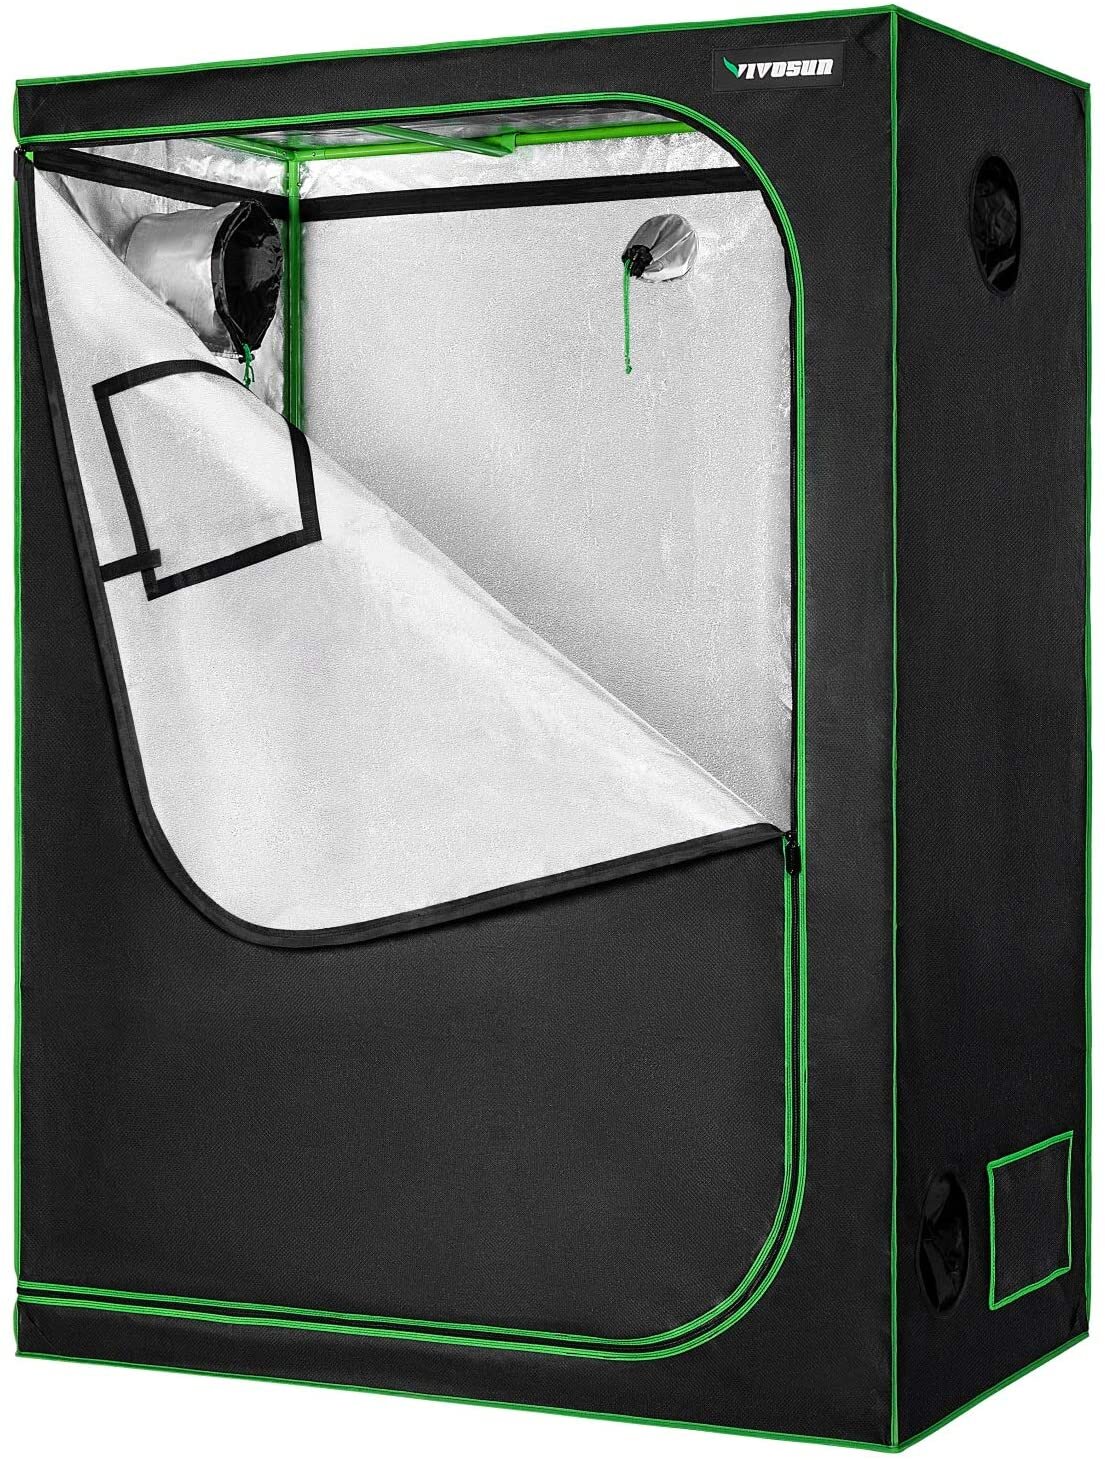 Details about   VIVOSUN Mylar Reflective Grow Tent Hydroponics Grow Room 120"x60"x80" 10x5FT 